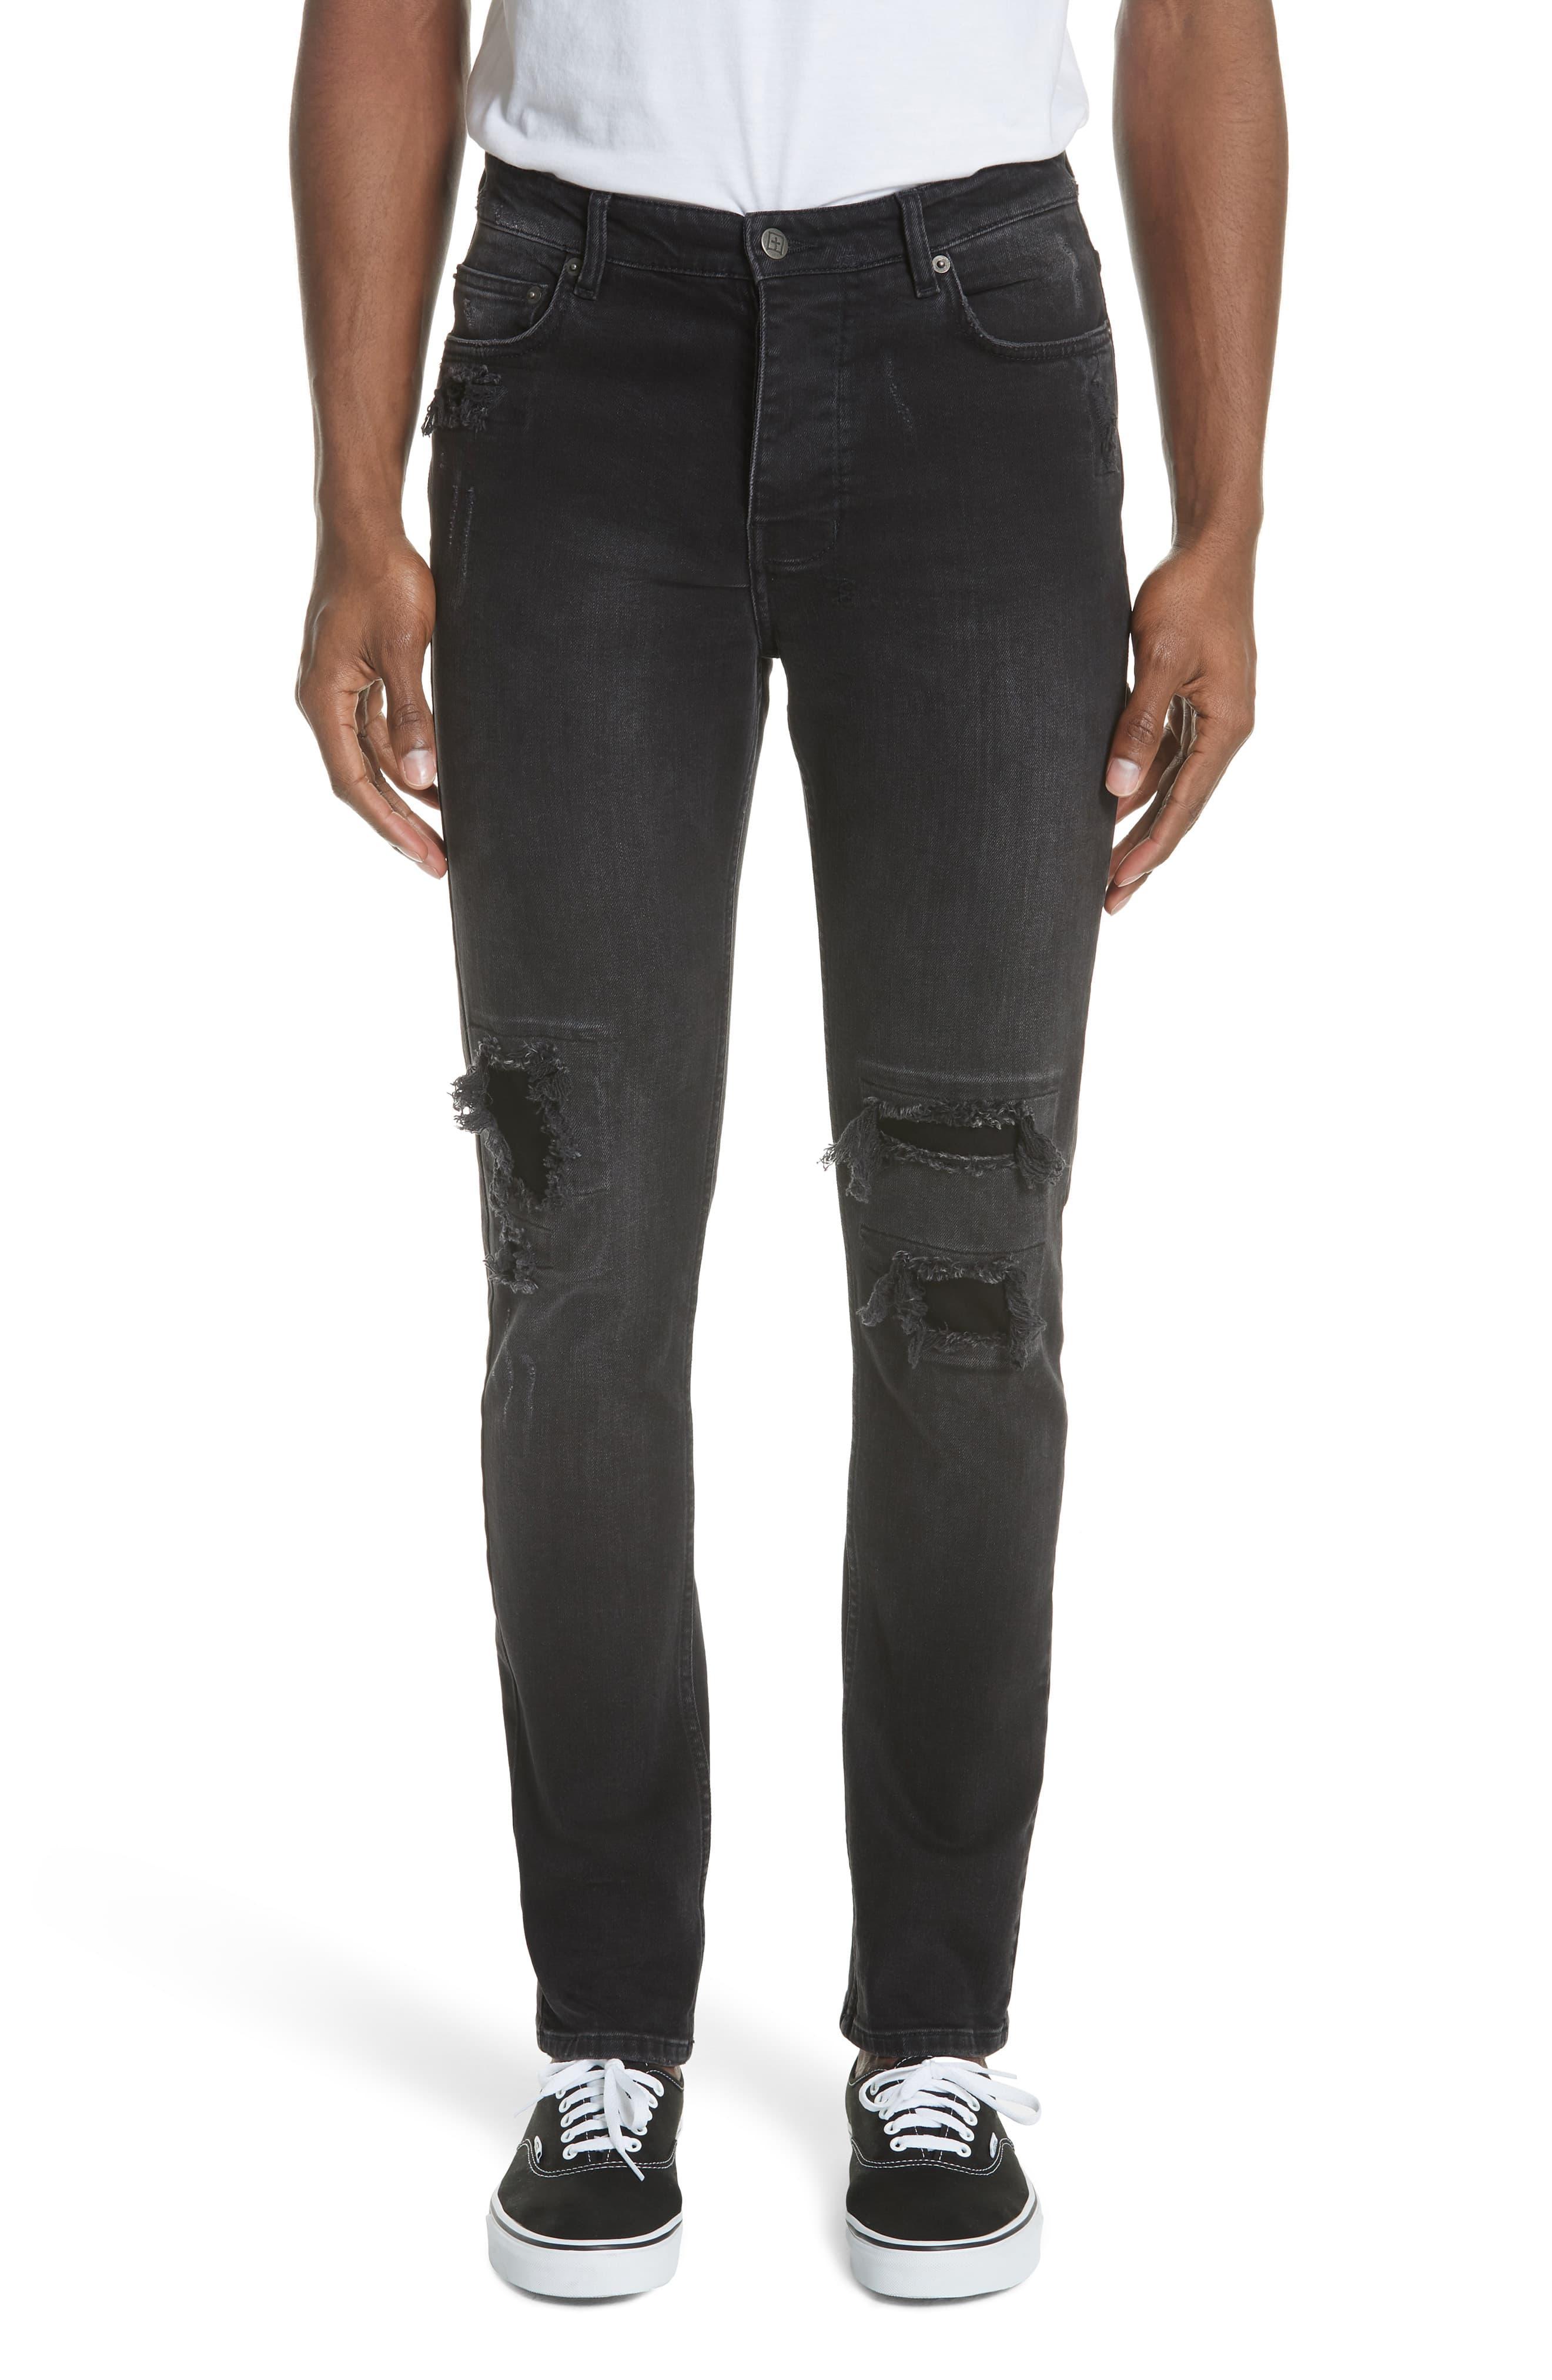 Ksubi Denim Chitch Boneyard Skinny Fit Jeans in Black for Men - Lyst